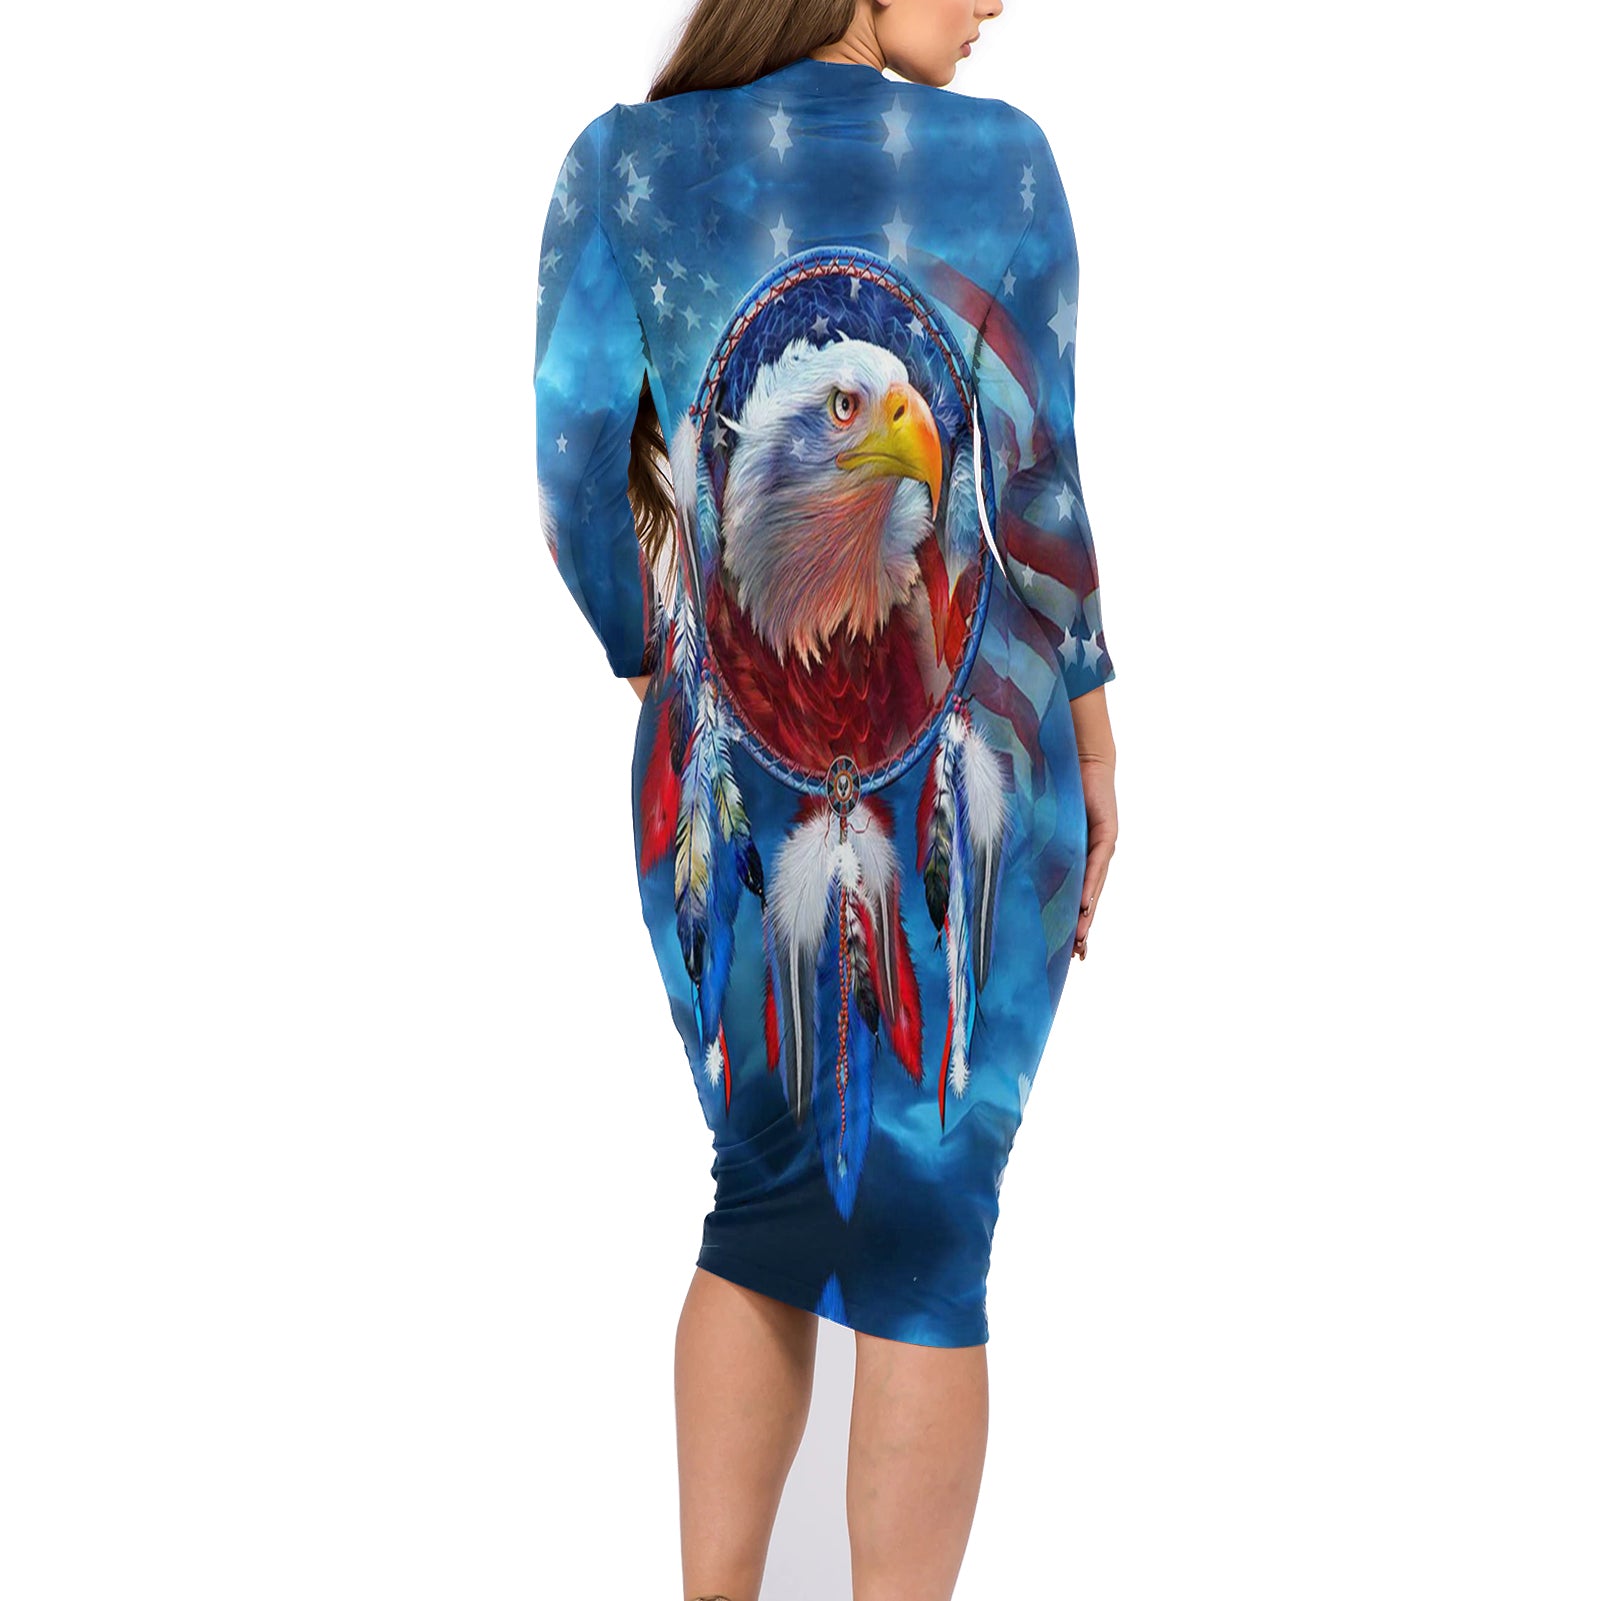 Powwow Store gb nat00099 native american dreamcatcher eagle body dress